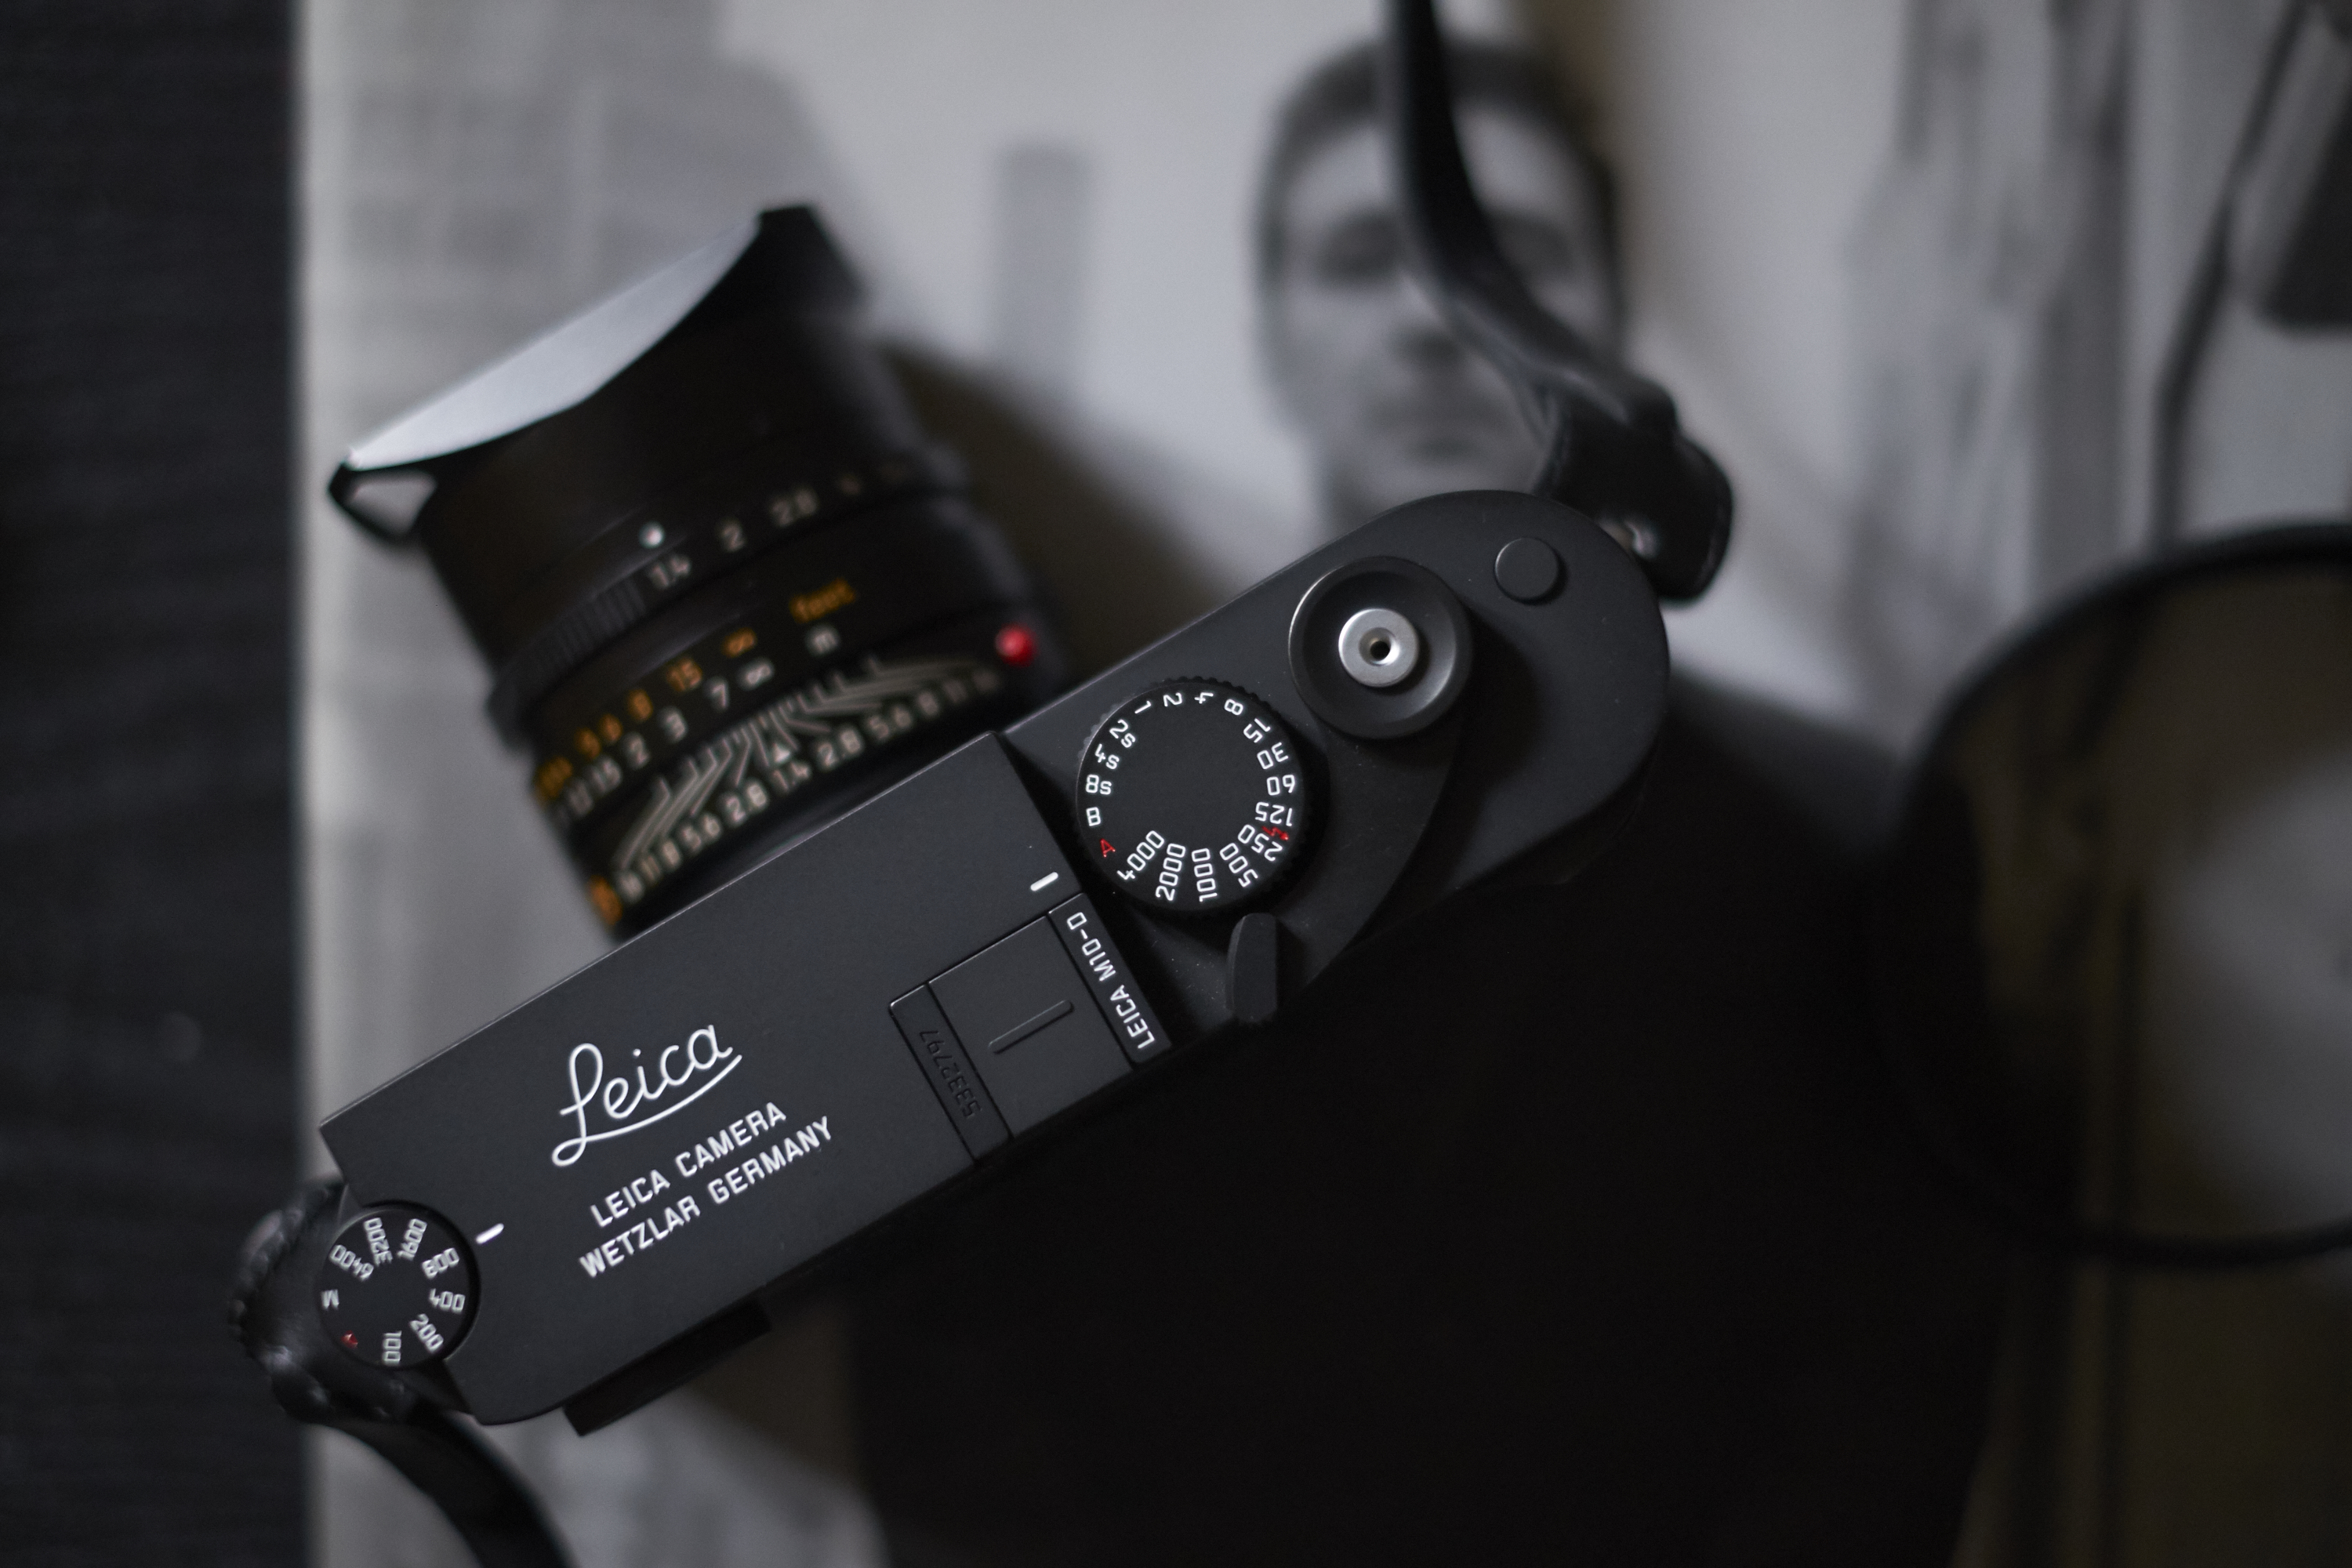 Leica M10 - Photo Review